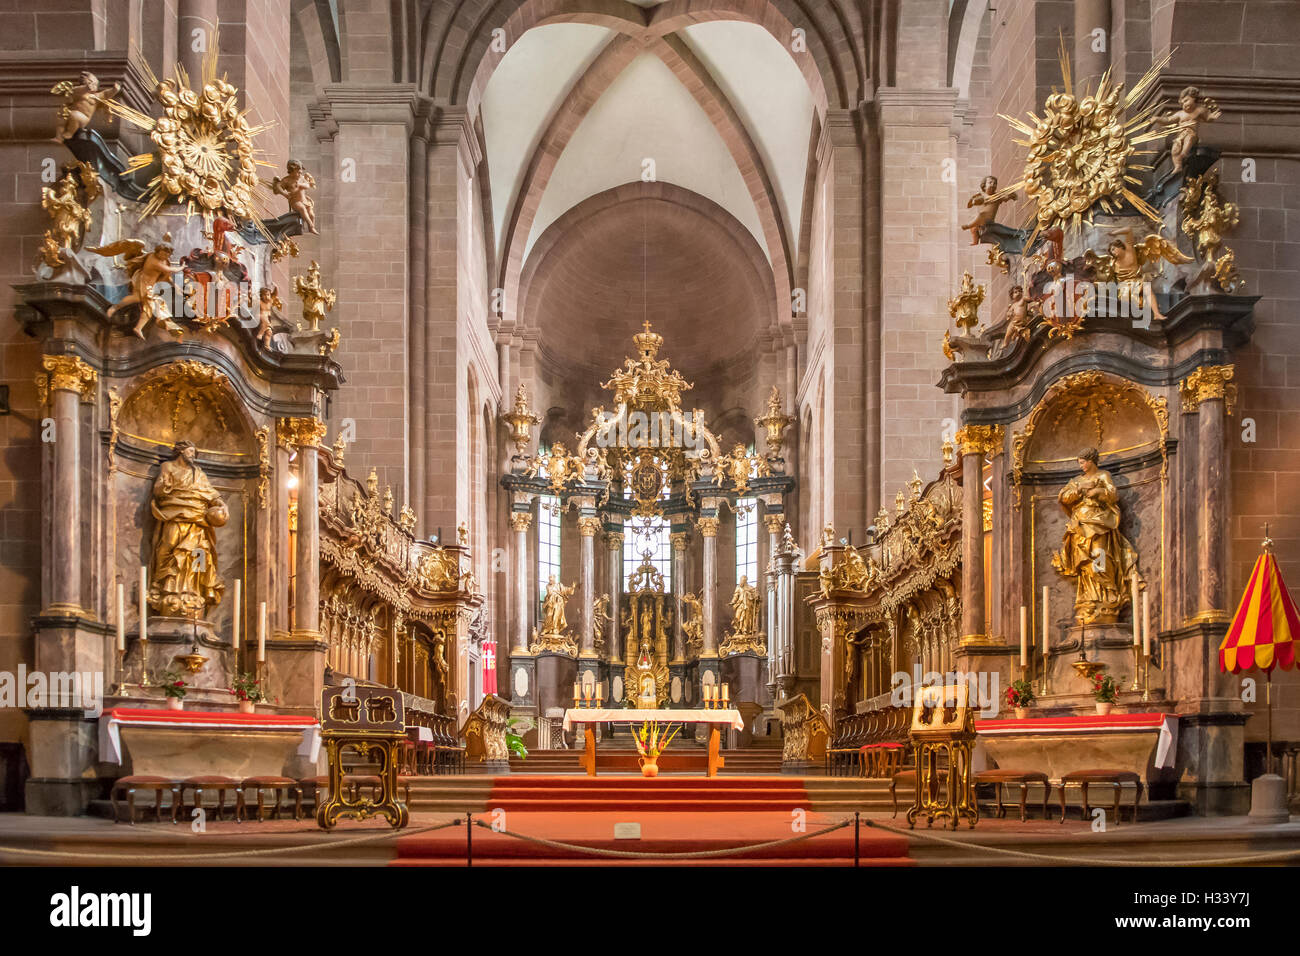 Coro e Altare in St Peters Cathedral, Worm, Renania-Palatinato, Germania Foto Stock